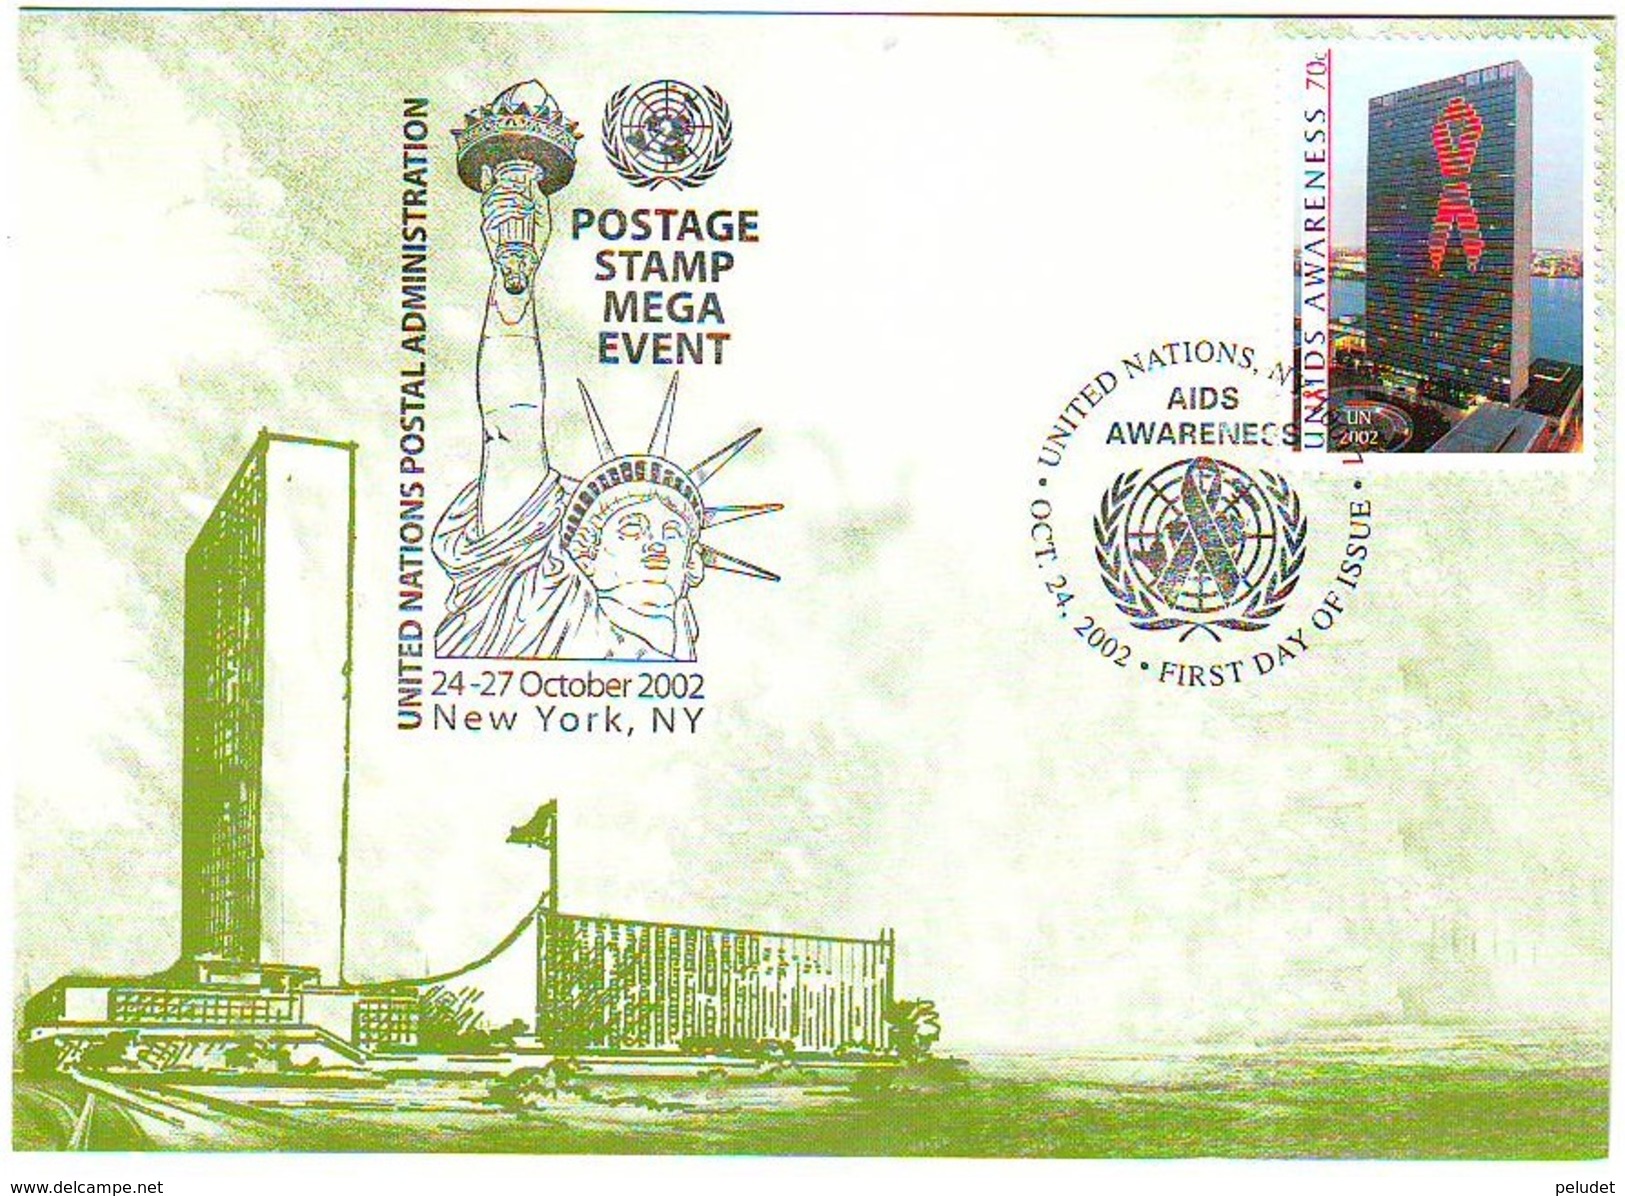 U.N. - UNITED NATIONS POSTAL ADMINISTRATION - NEW YORK - POSTAGE STAMP MEGA EVENT 2002 - SPECIAL CANCEL - Maximum Cards